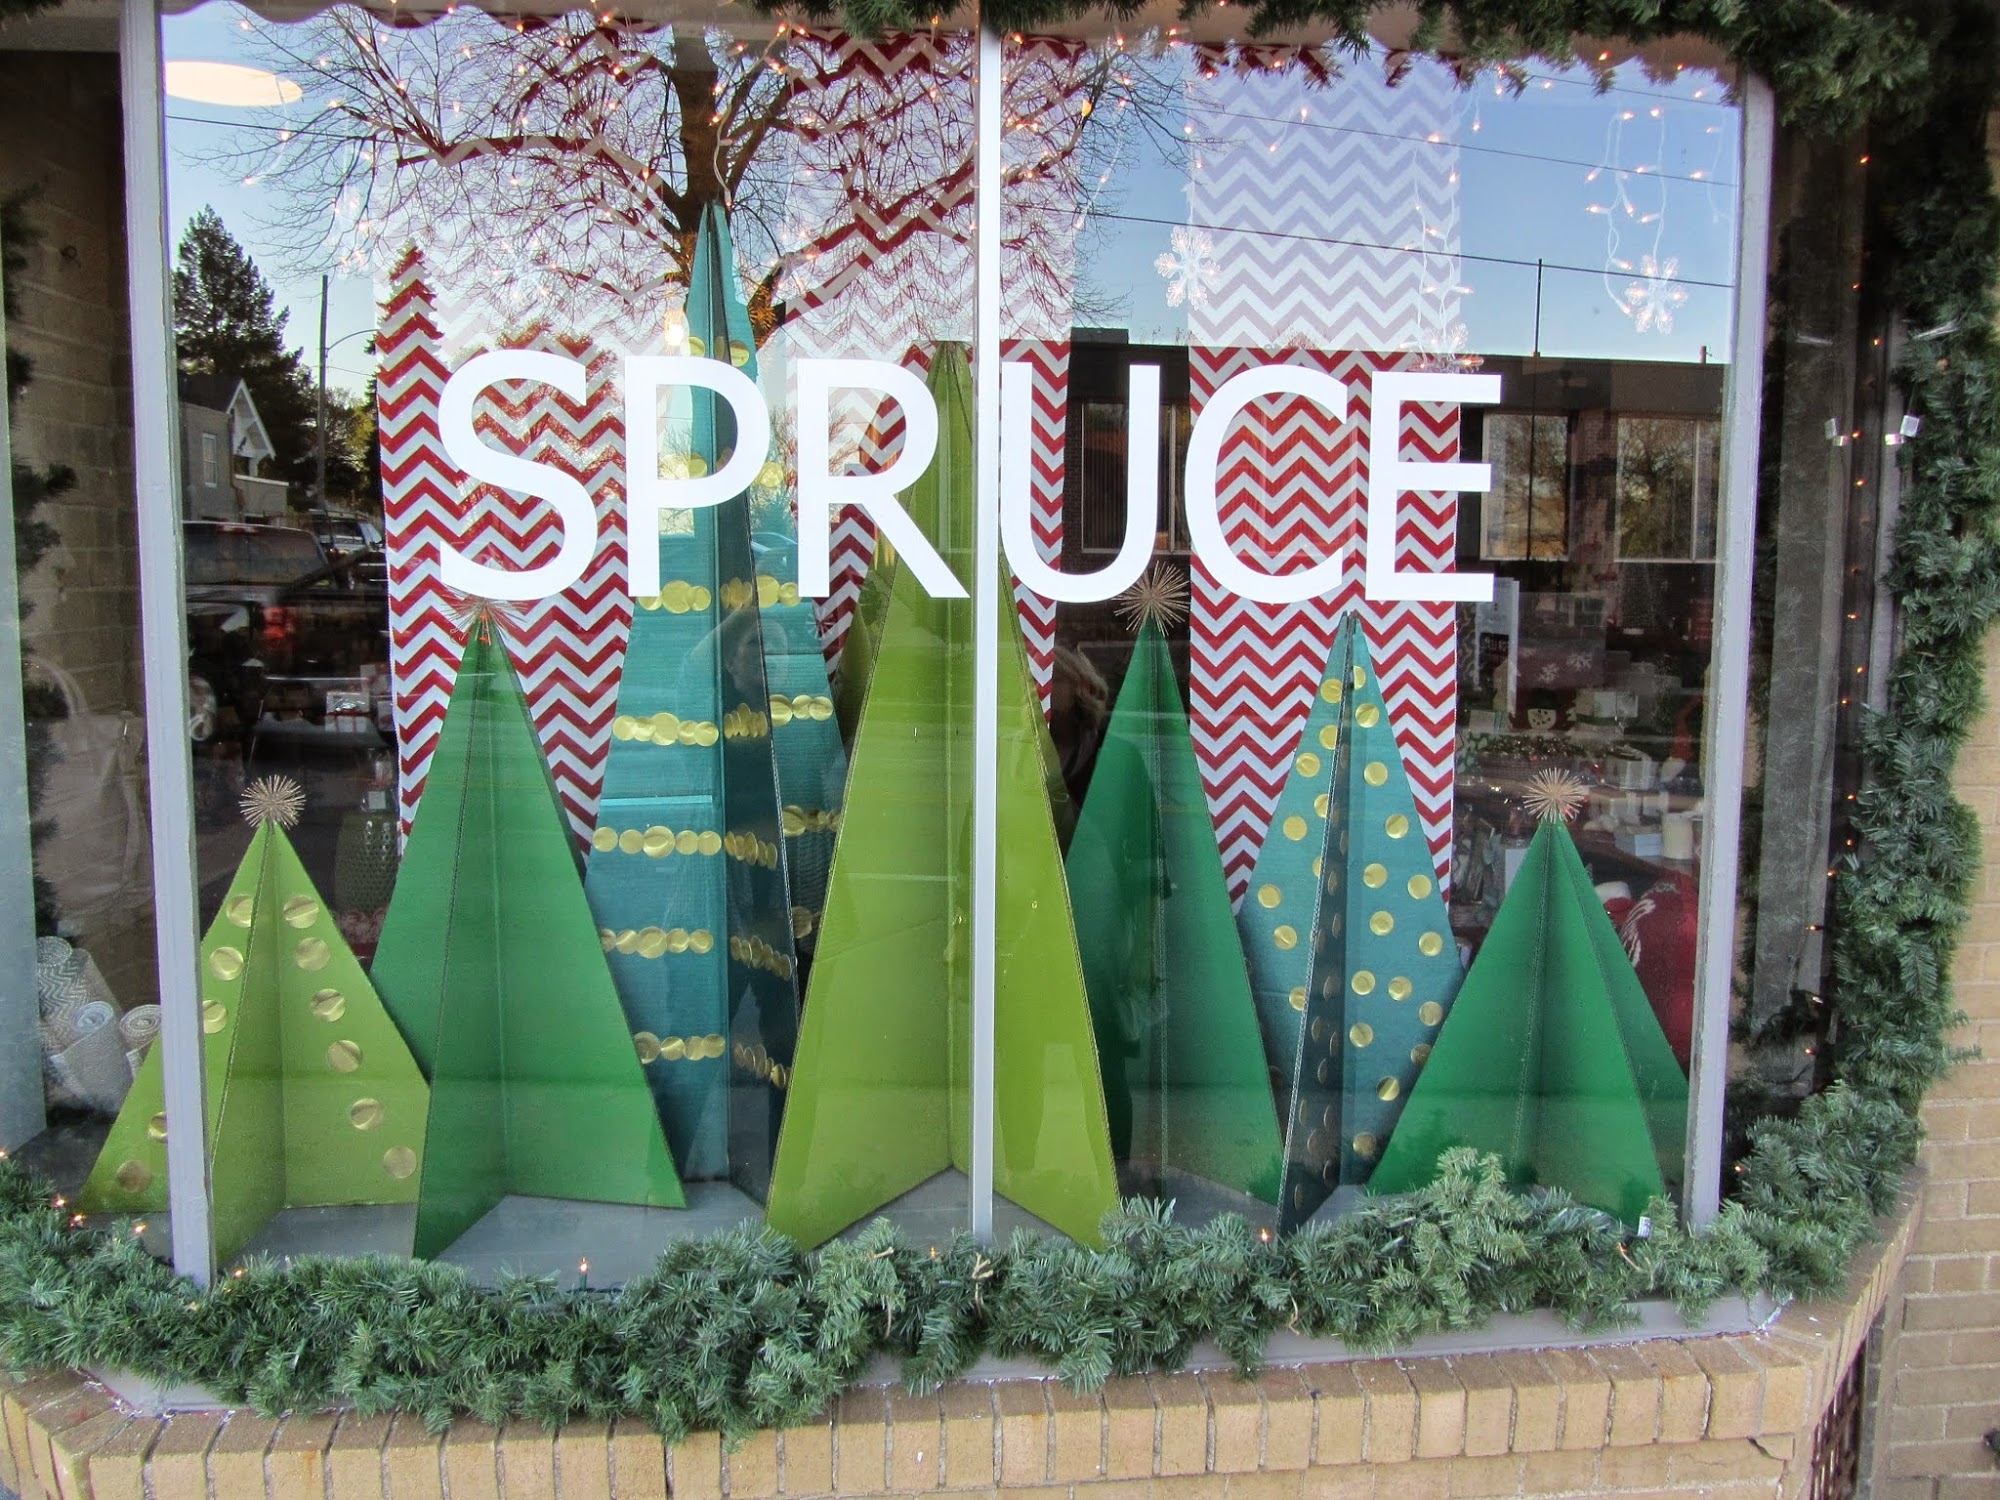 Spruce